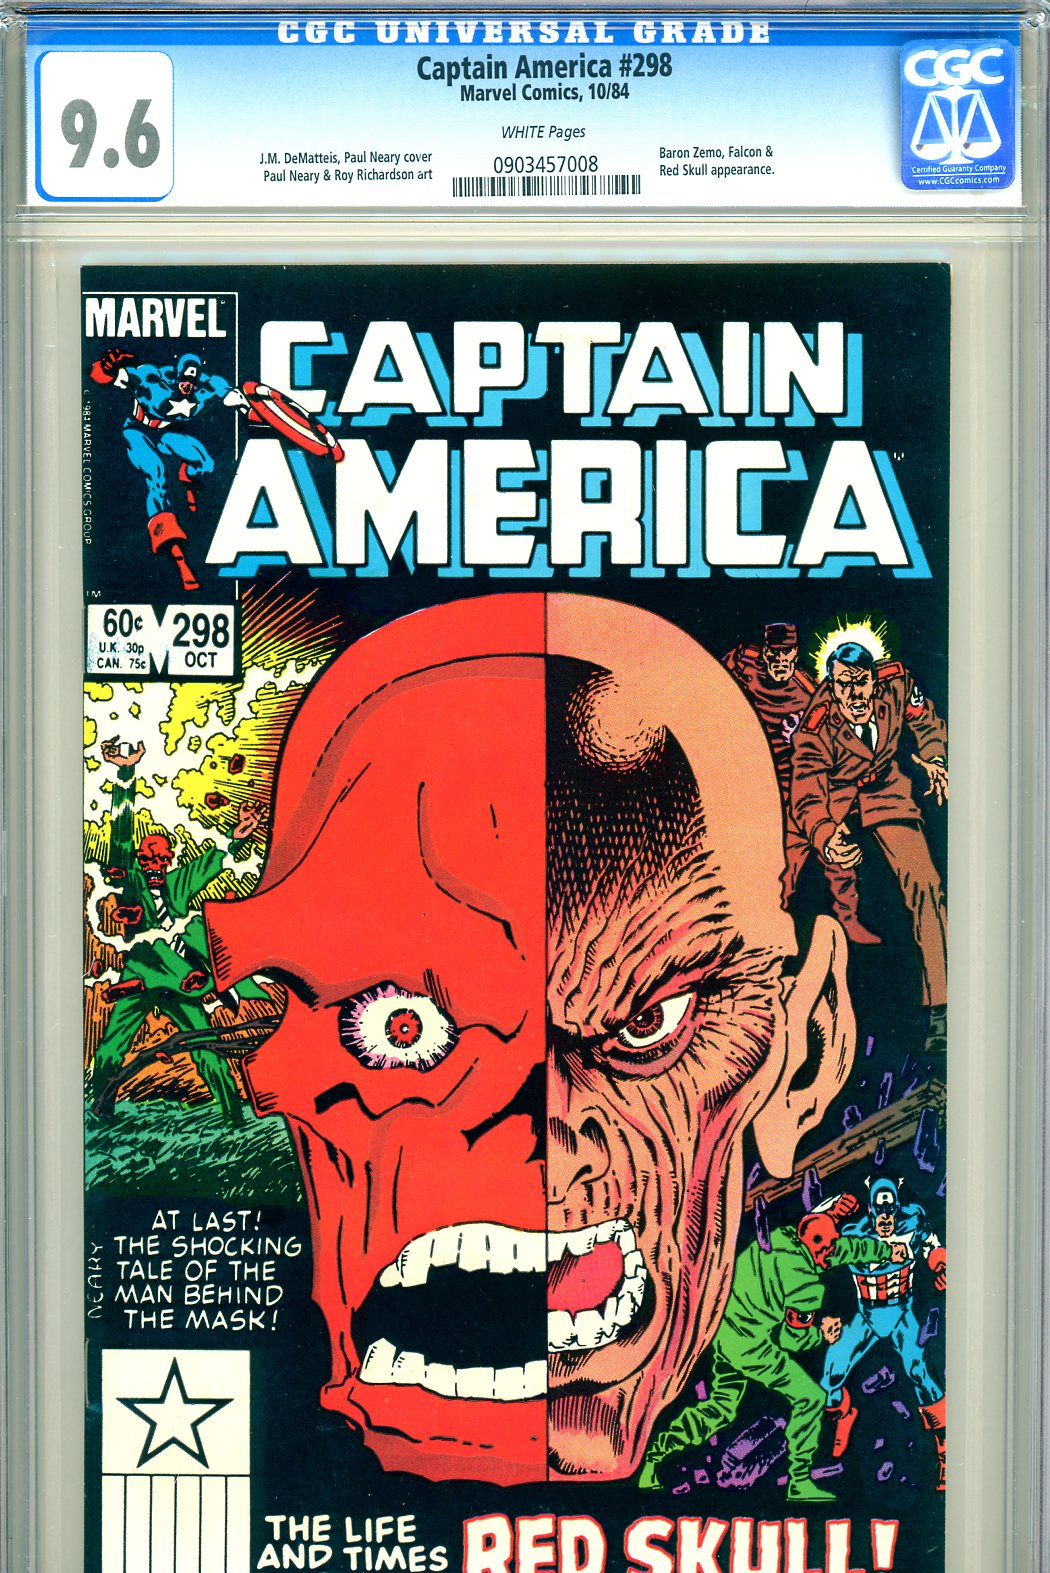 Cedar Chest Comics - Captain America #298 CGC graded 9.6 classic 